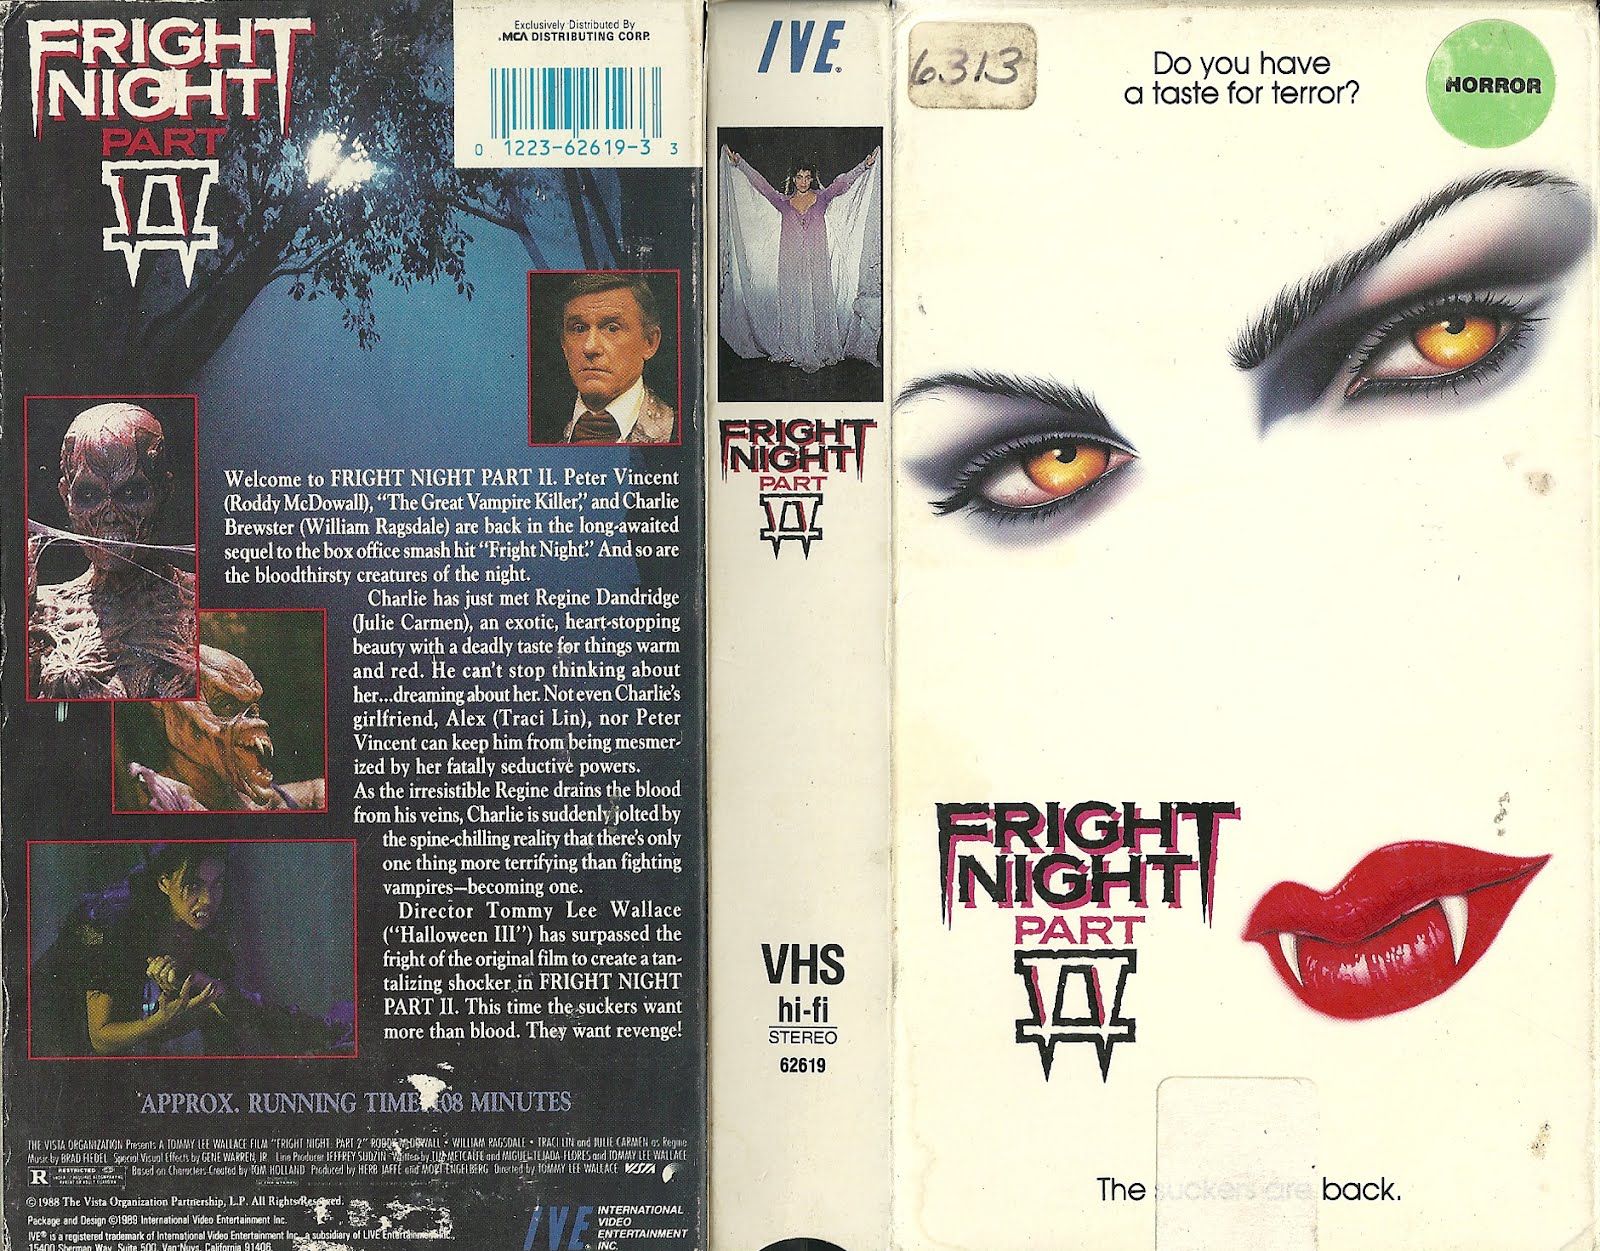 Happyotter: FRIGHT NIGHT 2 (1988)